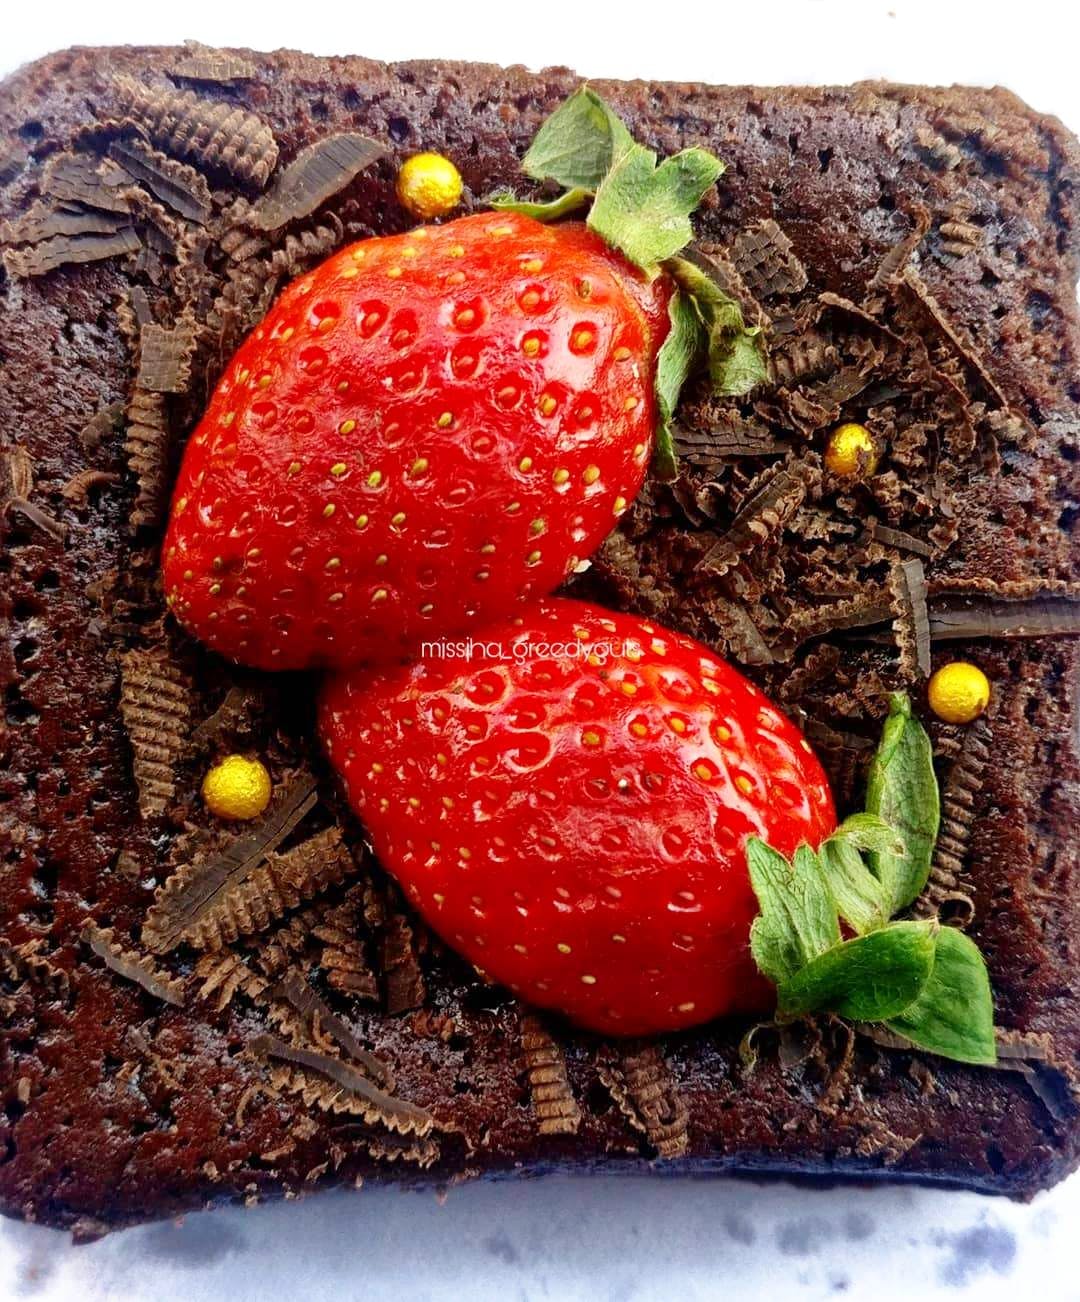 Food,Strawberry,Chocolate brownie,Strawberries,Chocolate cake,Chocolate,Cuisine,Dish,Cake,Dessert